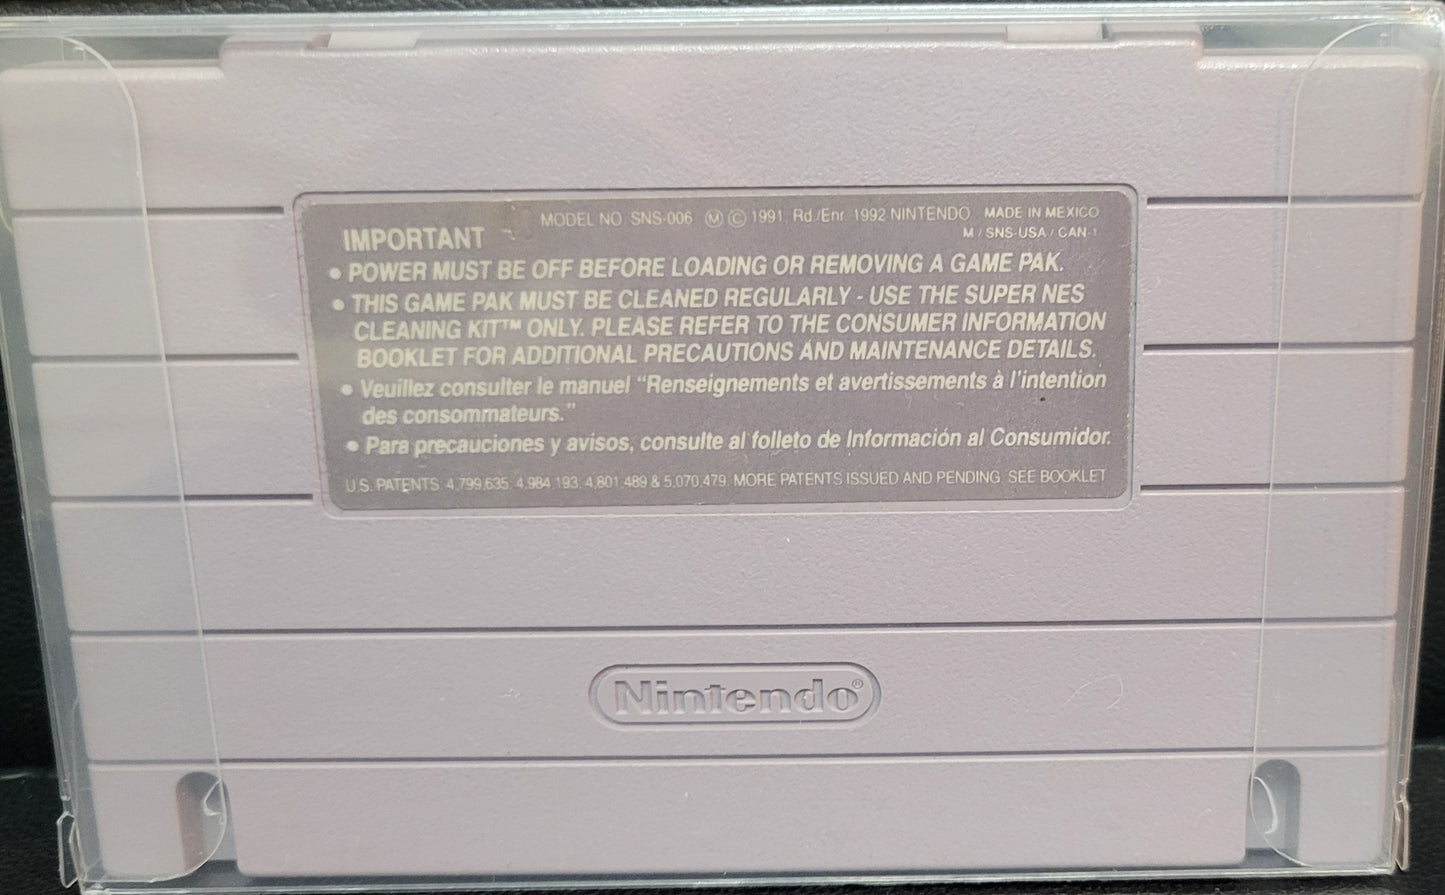 Authentic 1994 Romance Of 3 Kingdoms IV - SNES - Super Nintendo Ent. System NTSC Cartridge